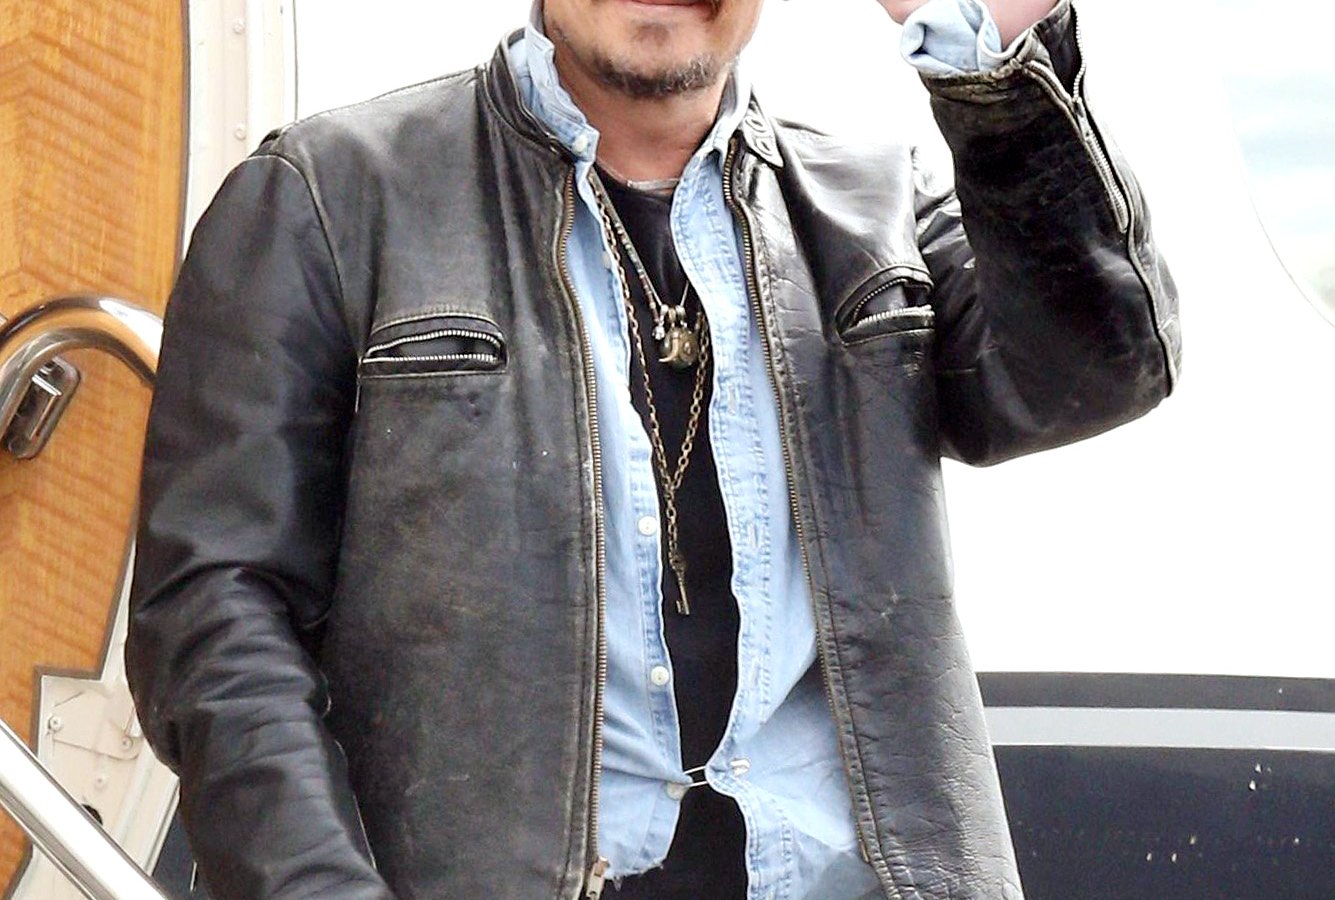 Johnny Depp arrives at Brisbane Airport, Australia on April 21, 2015.